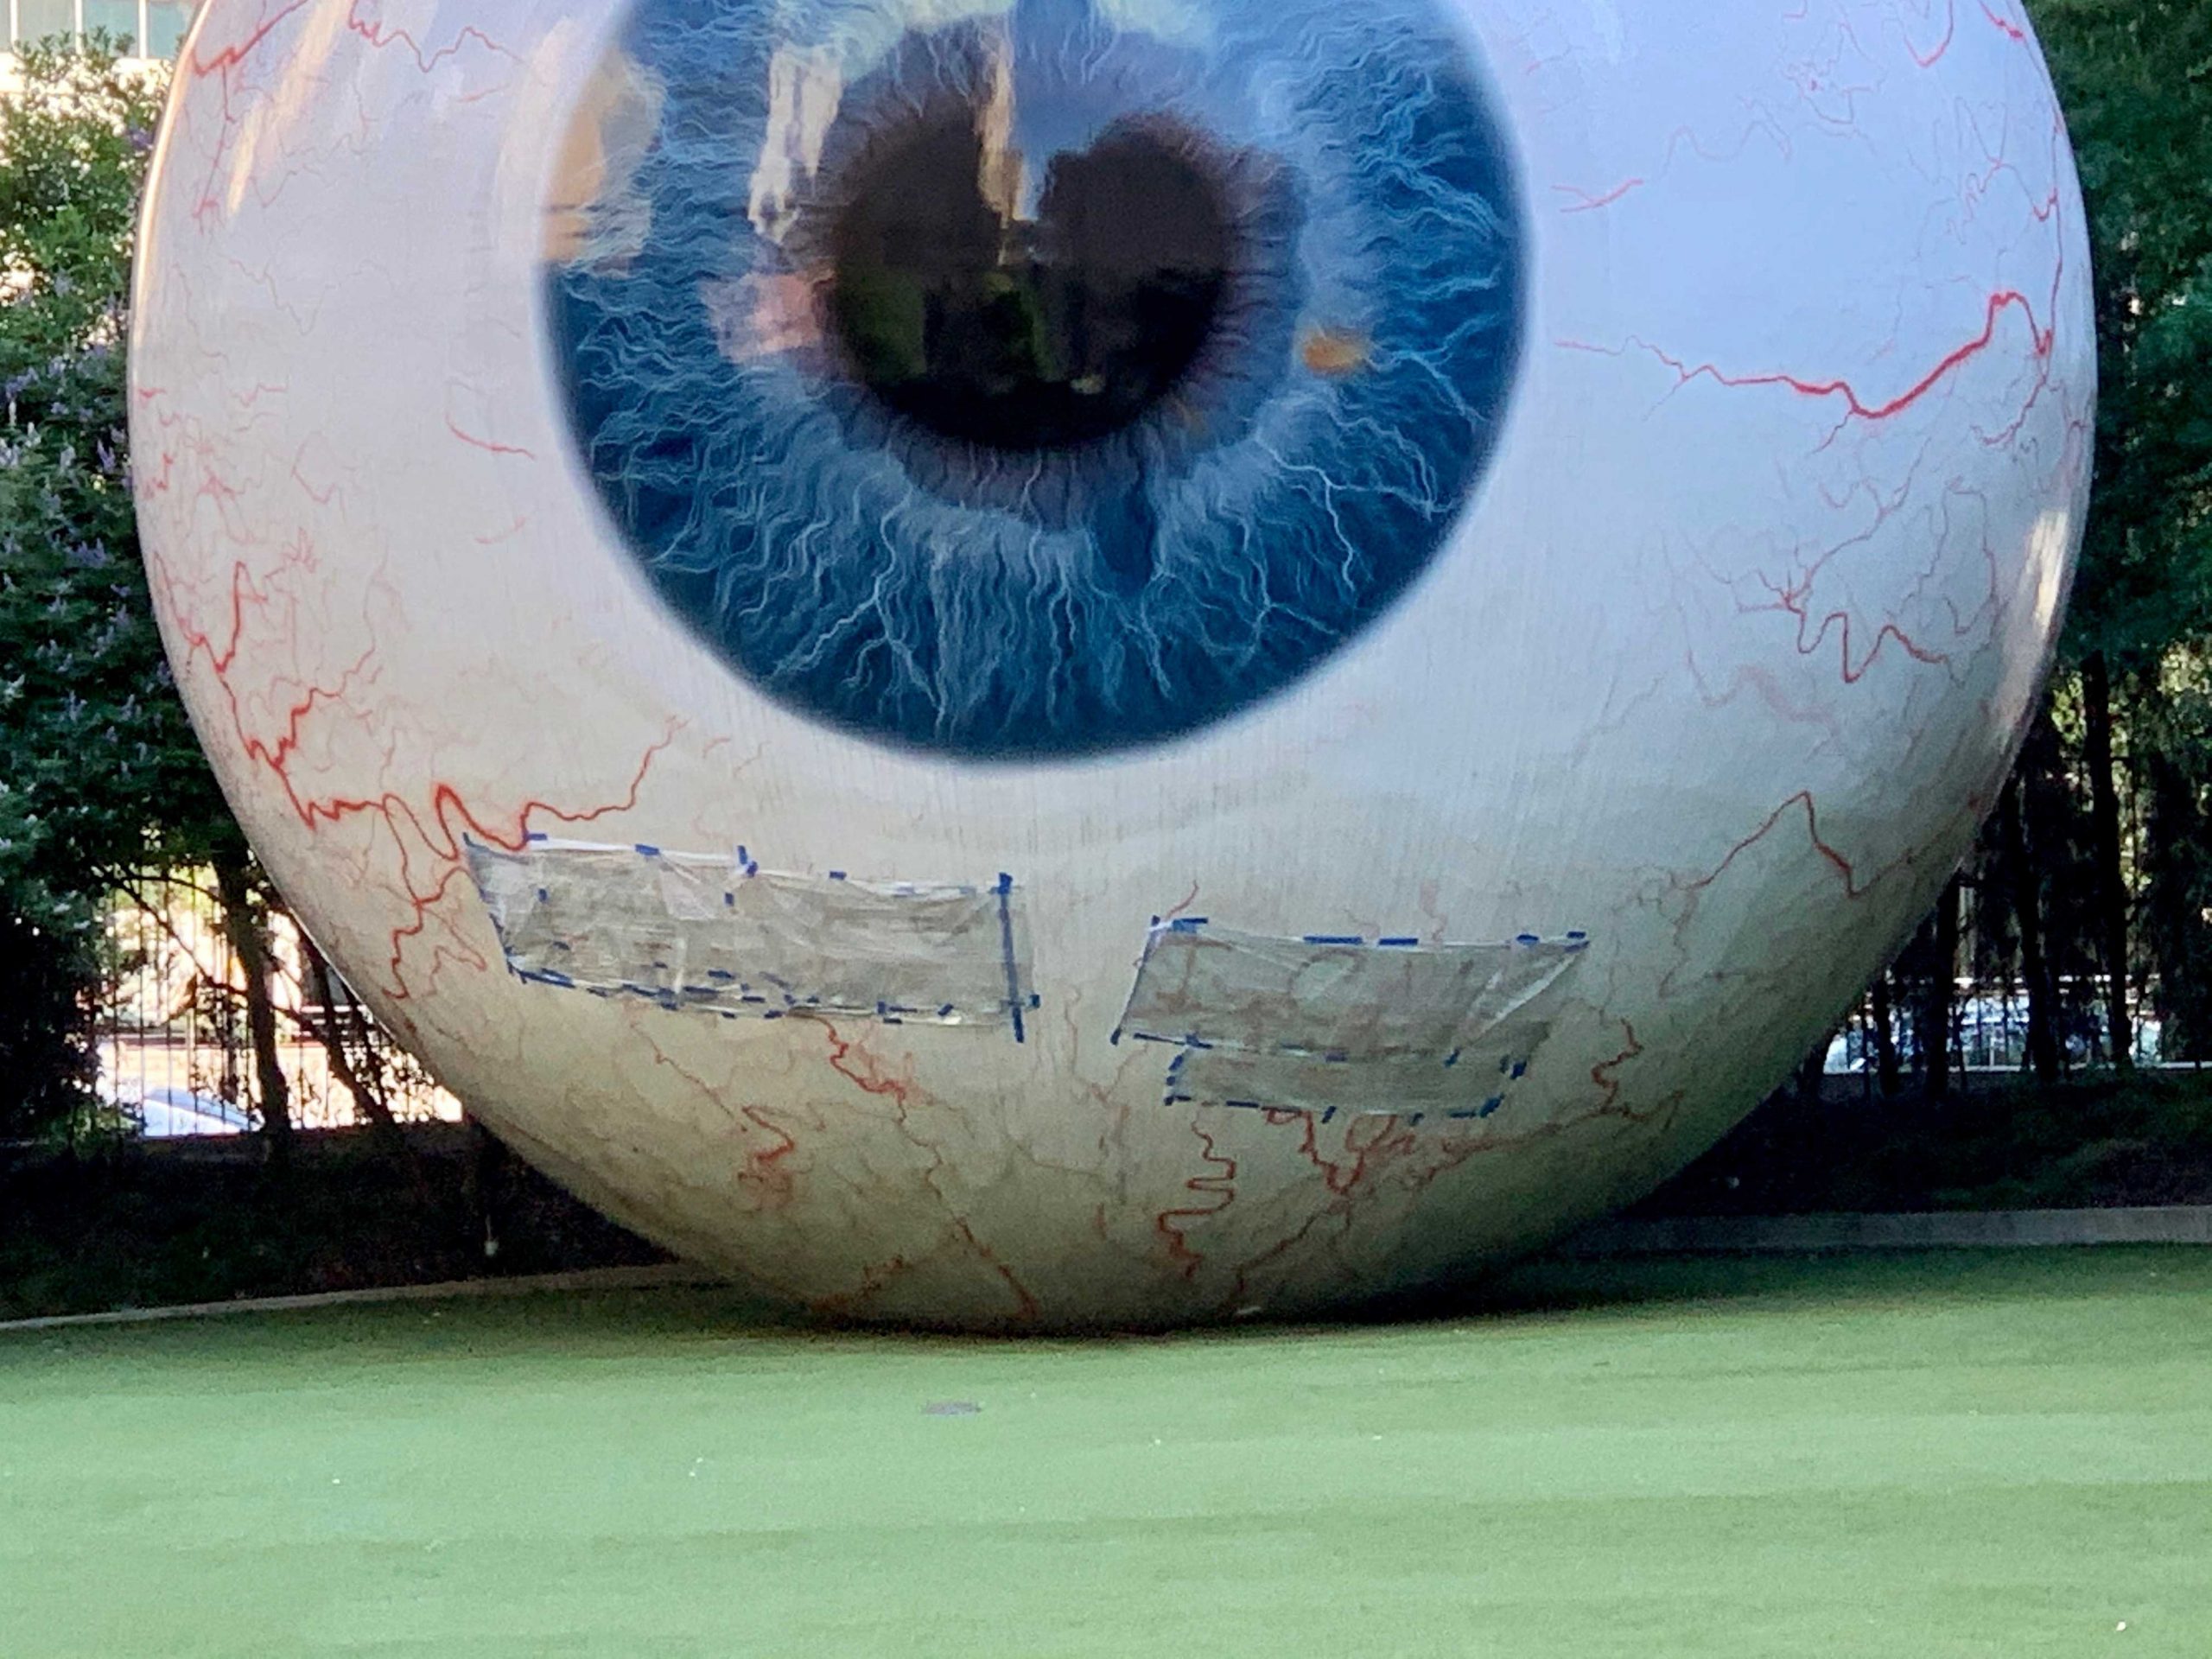 Dallas eyeball public art